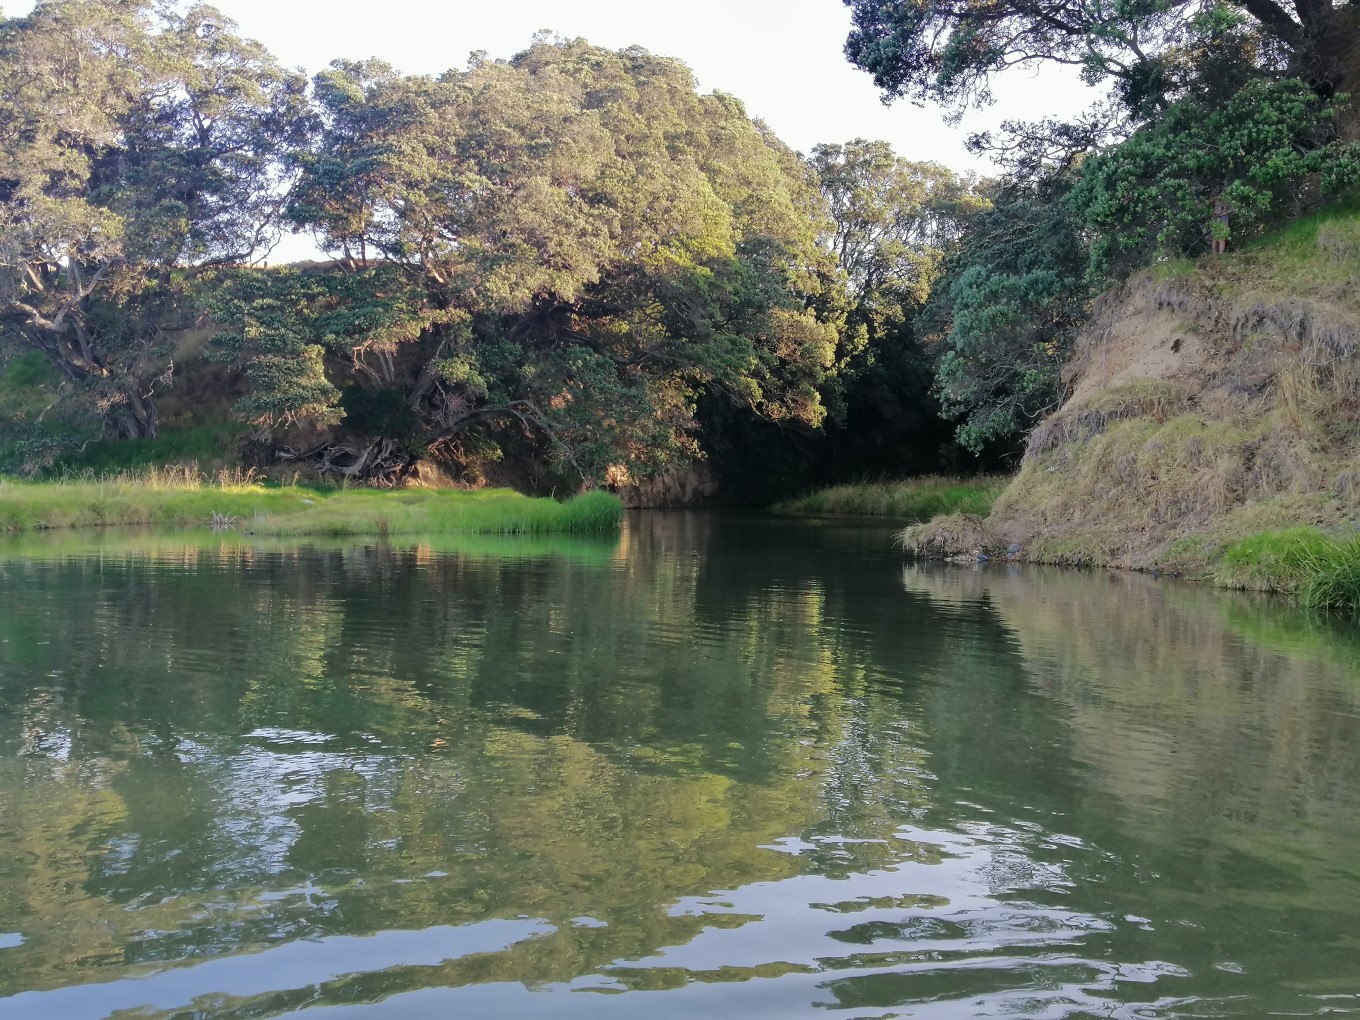 Cool off in the freshwater lagoon at Tāpapakanga Regional Park.